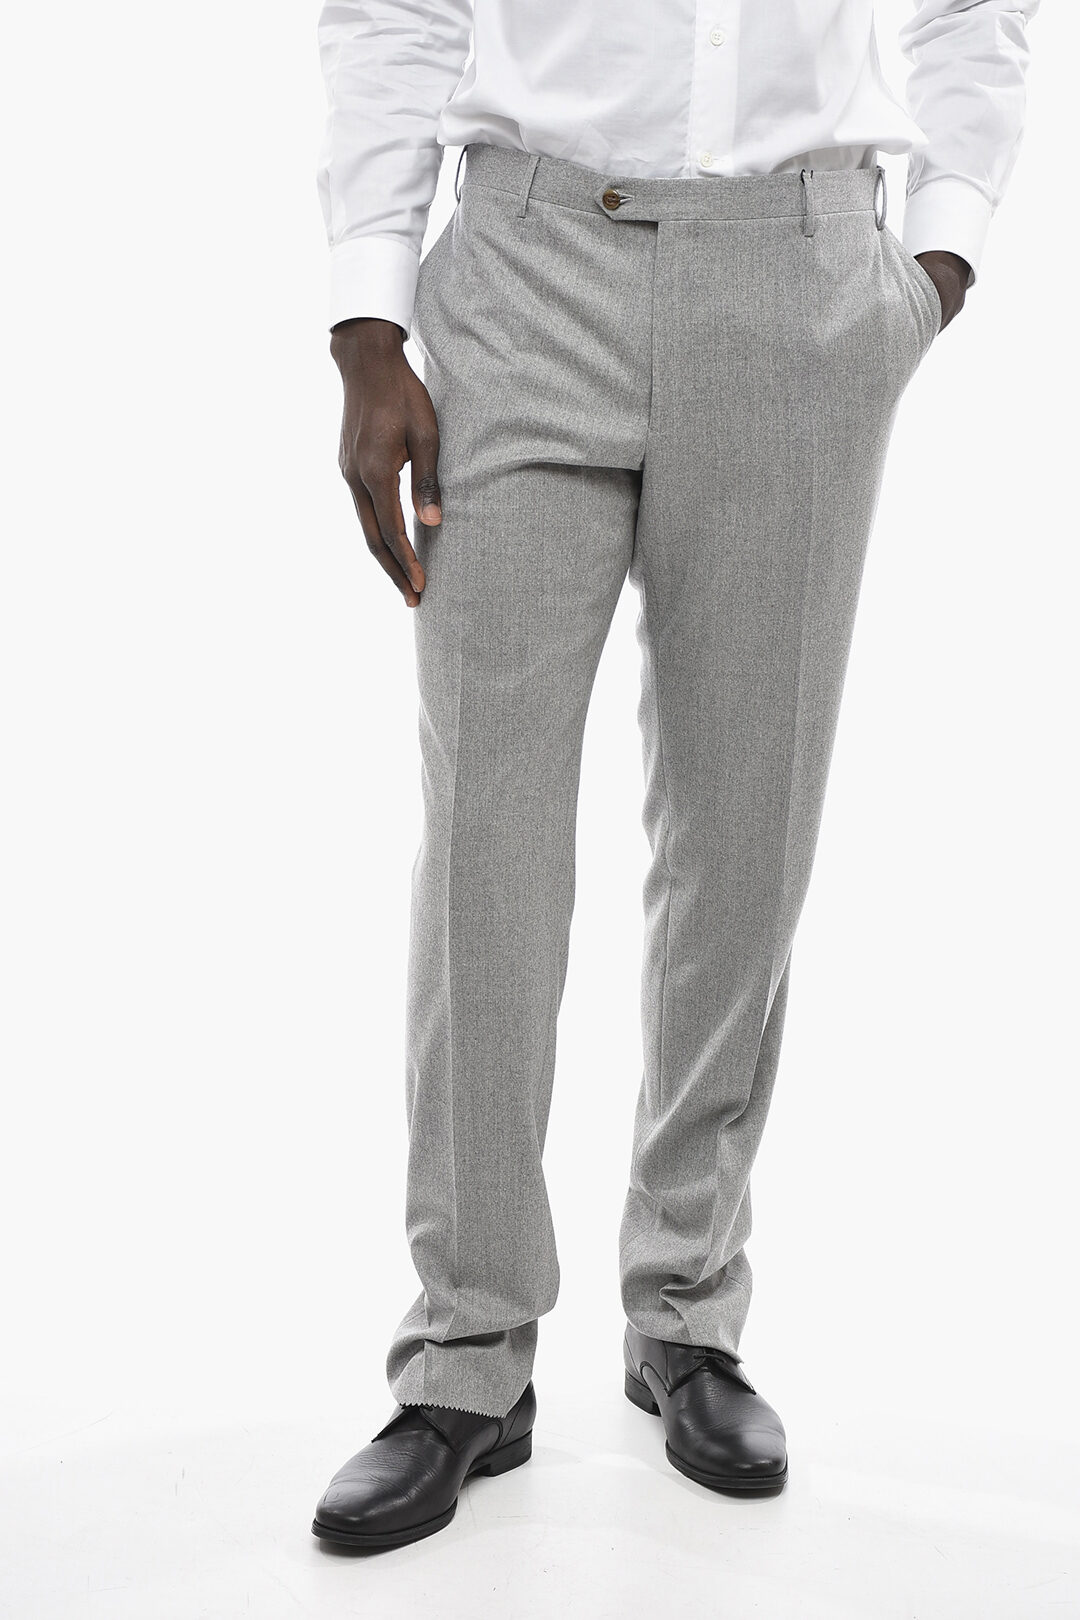 Ladies' Steel Grey Synergy Dress Pant (No Belt Loops) – UniformsInStock.com